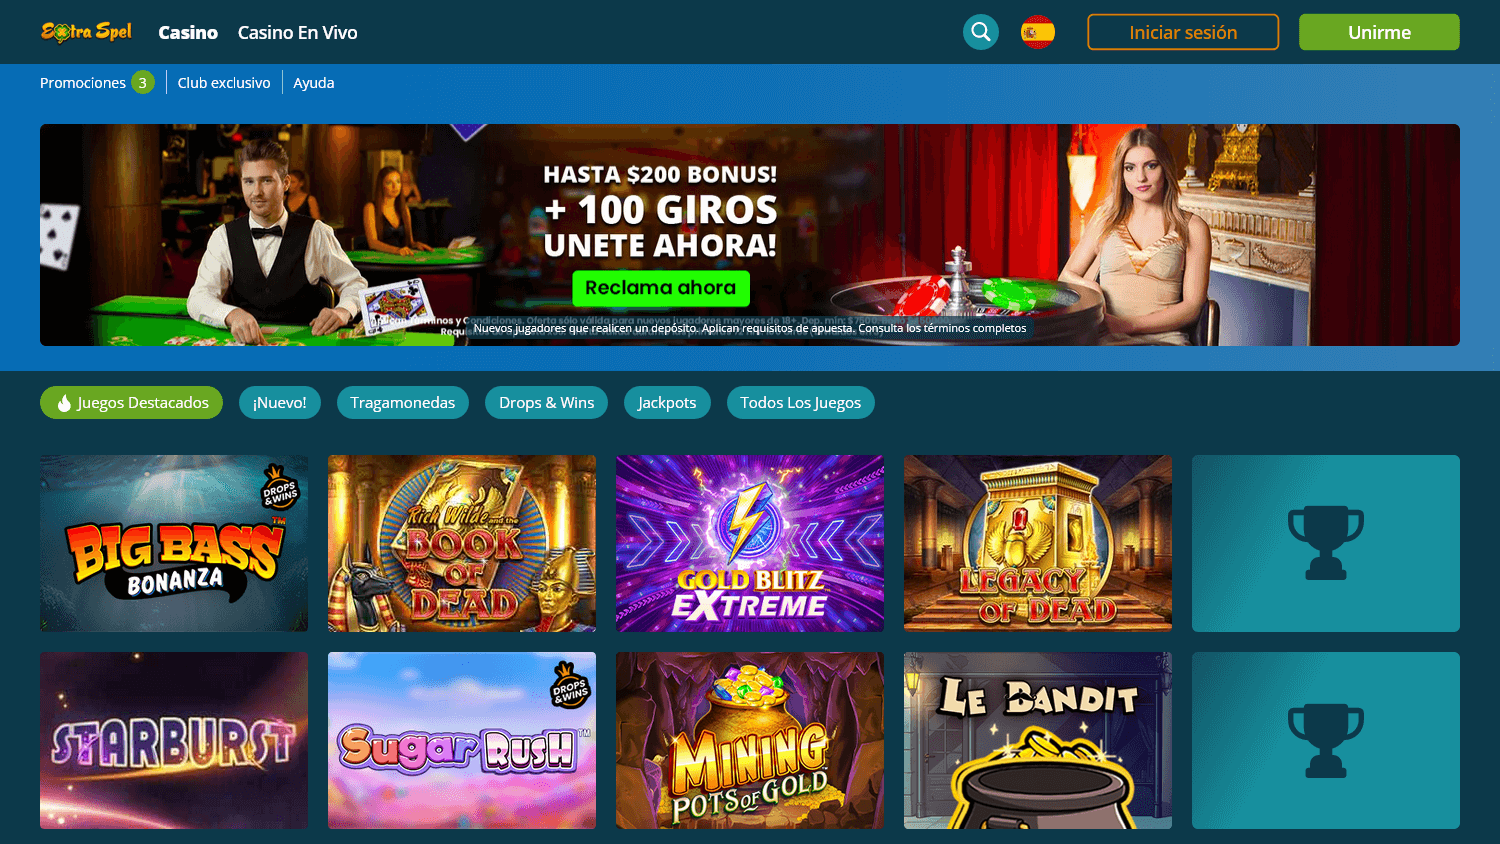 extra_spel_casino_homepage_desktop